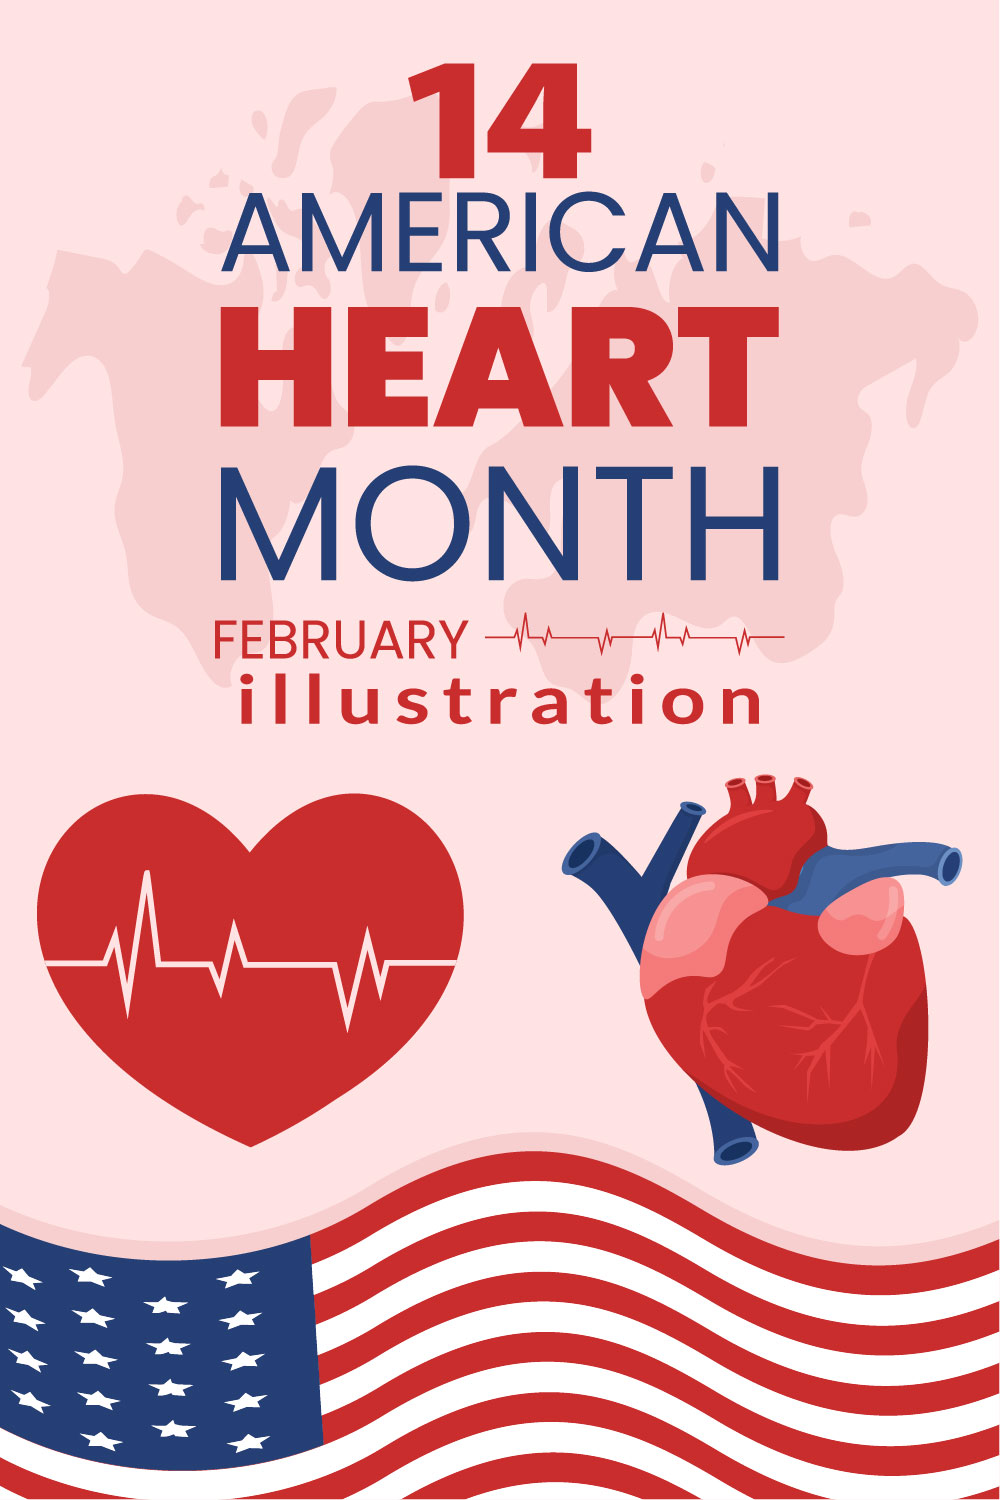 American Heart Month Illustration pinterest image.